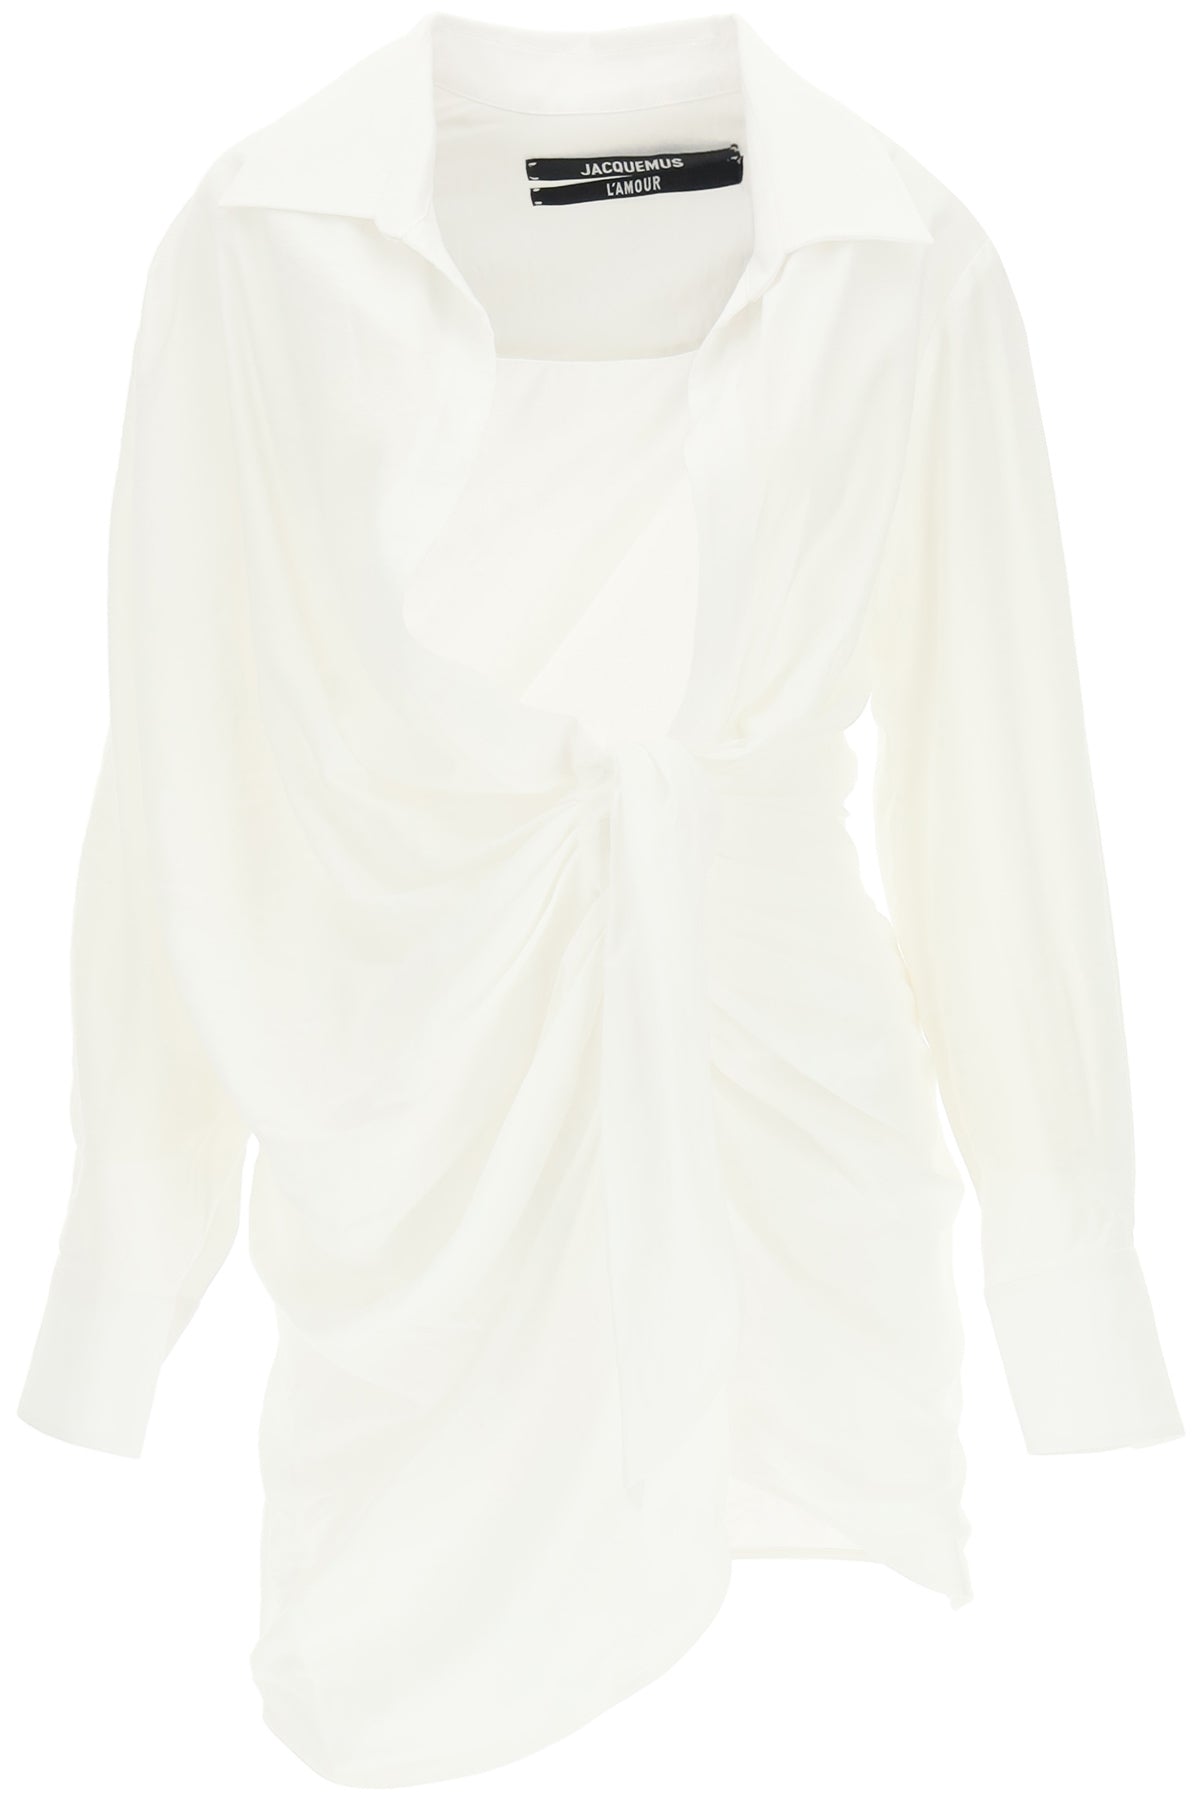 JACQUEMUS White Knotted Asymmetrical Minidress for Women